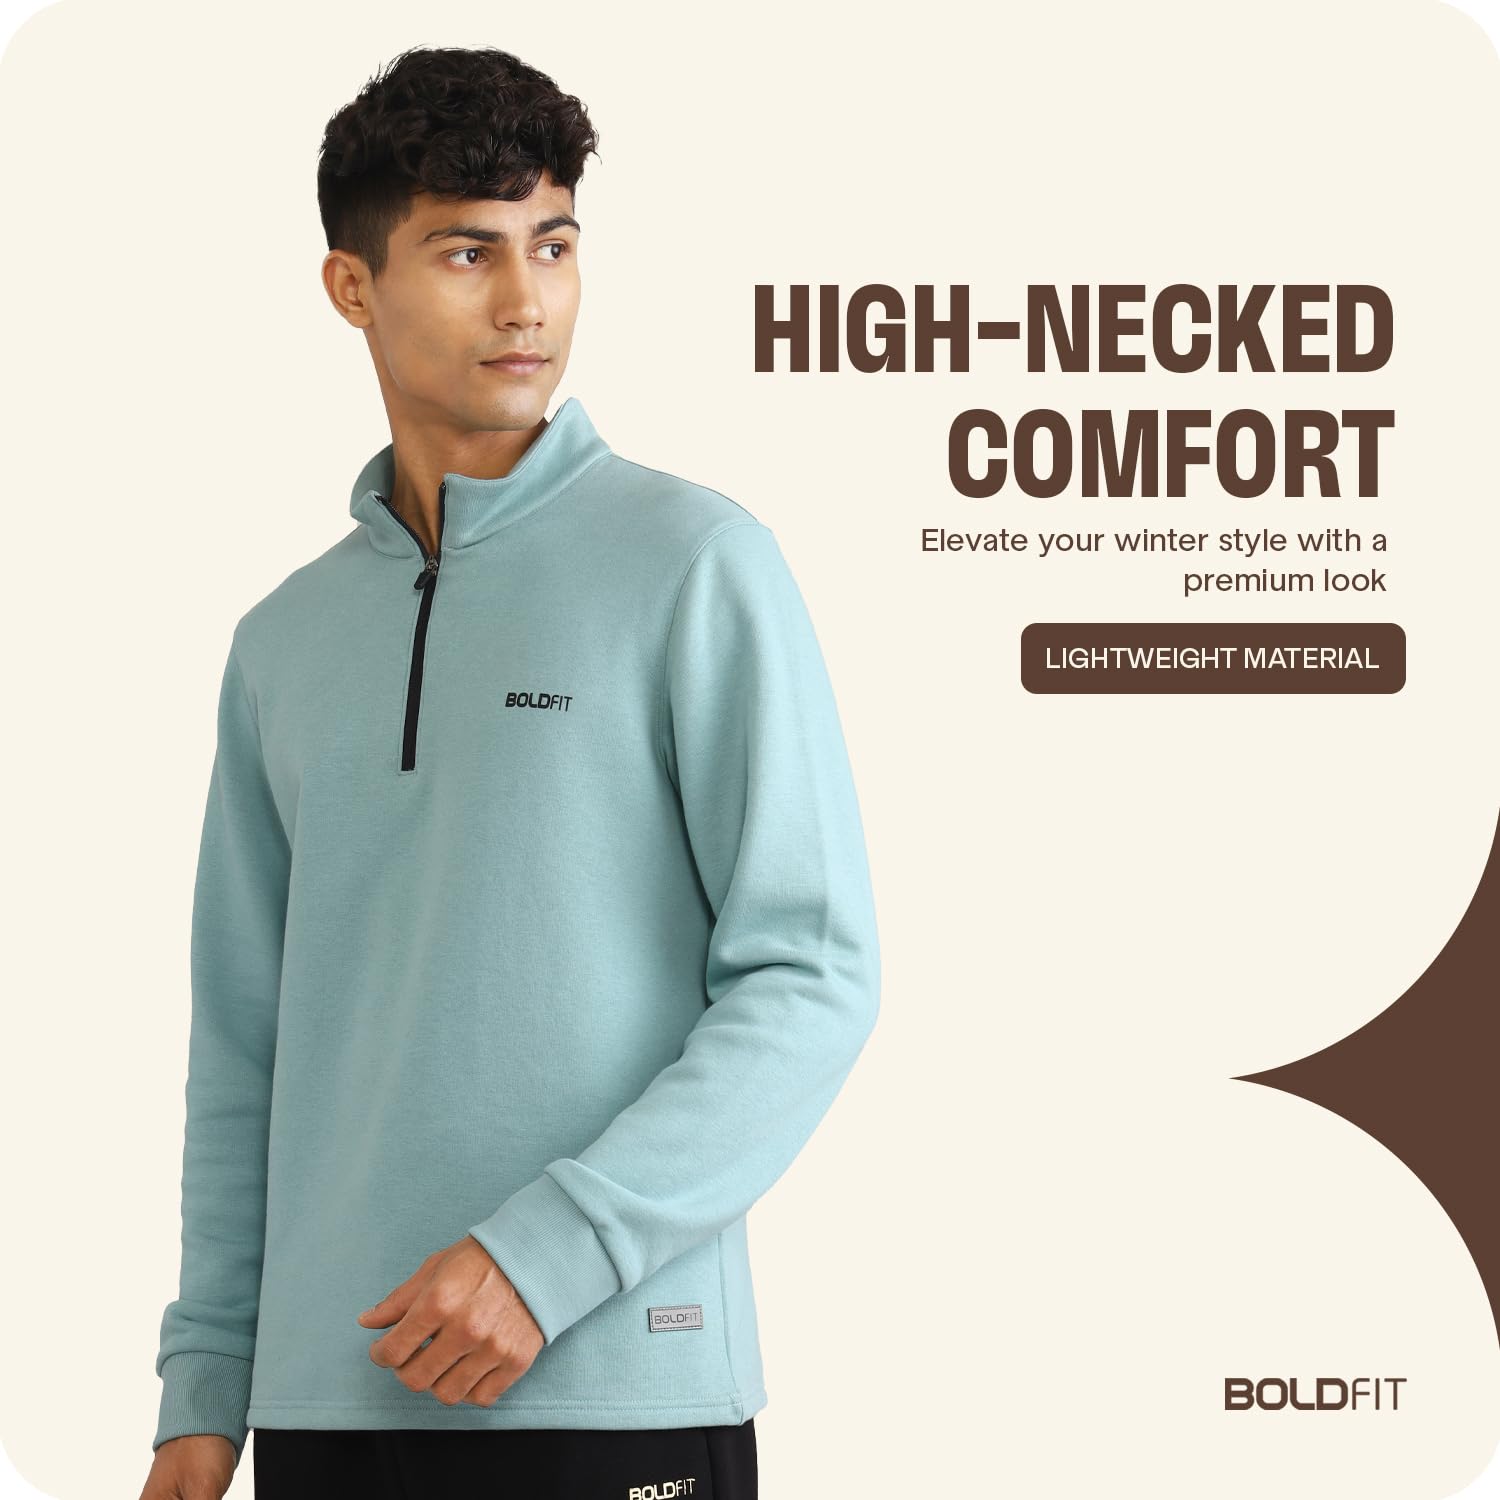 Boldfit Sweatshirt for Men High Neck Sweatshirt for Men Branded Sweatshirts for Men Half Zipper Sweatshirt for Men Pullover for Men with Zip Stylish Men Sweatshirt Jumper Sweat Shirt Men - Mintblue M 